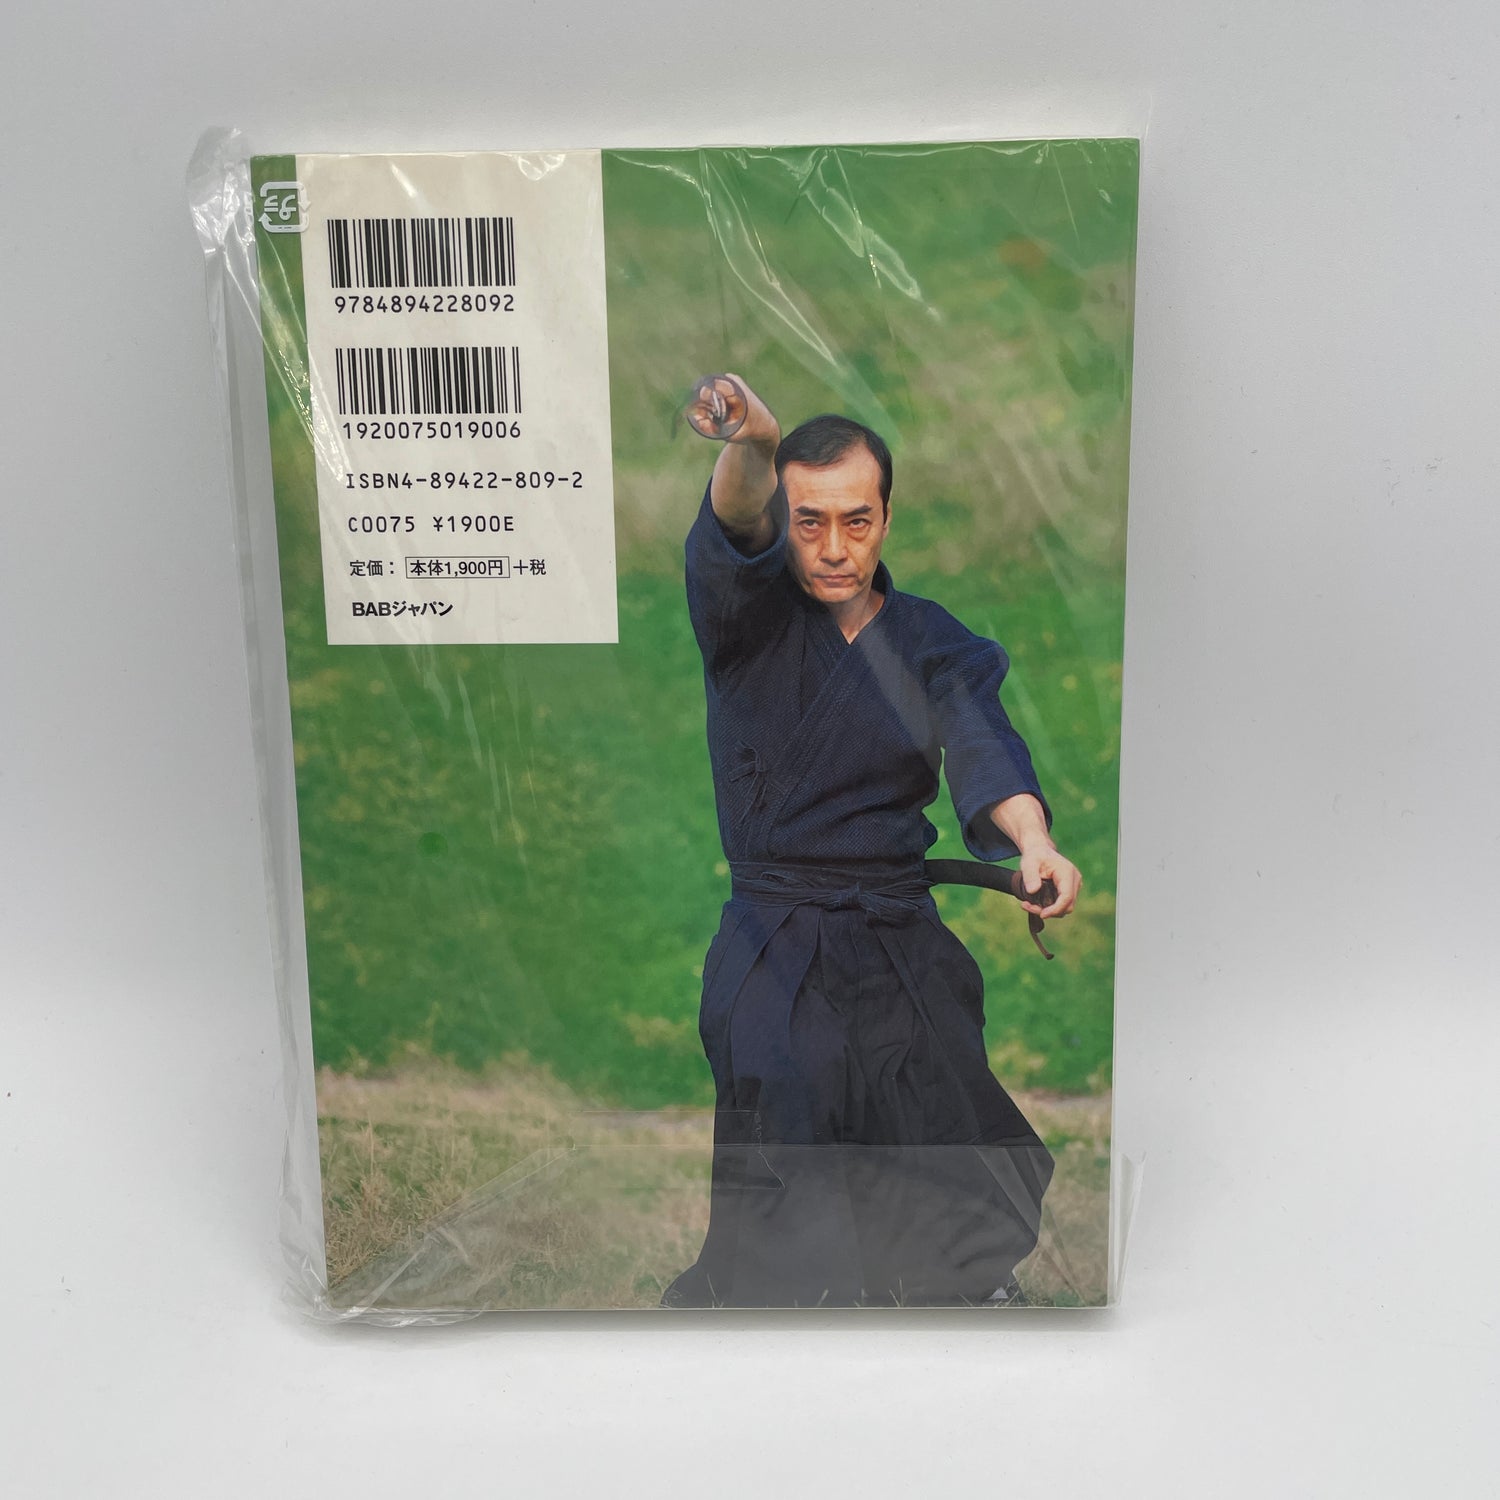 Ki Ken Tai Ichi Book 3: Kiwami by Tetsuzan Kuroda (1st Edition) (Preowned)